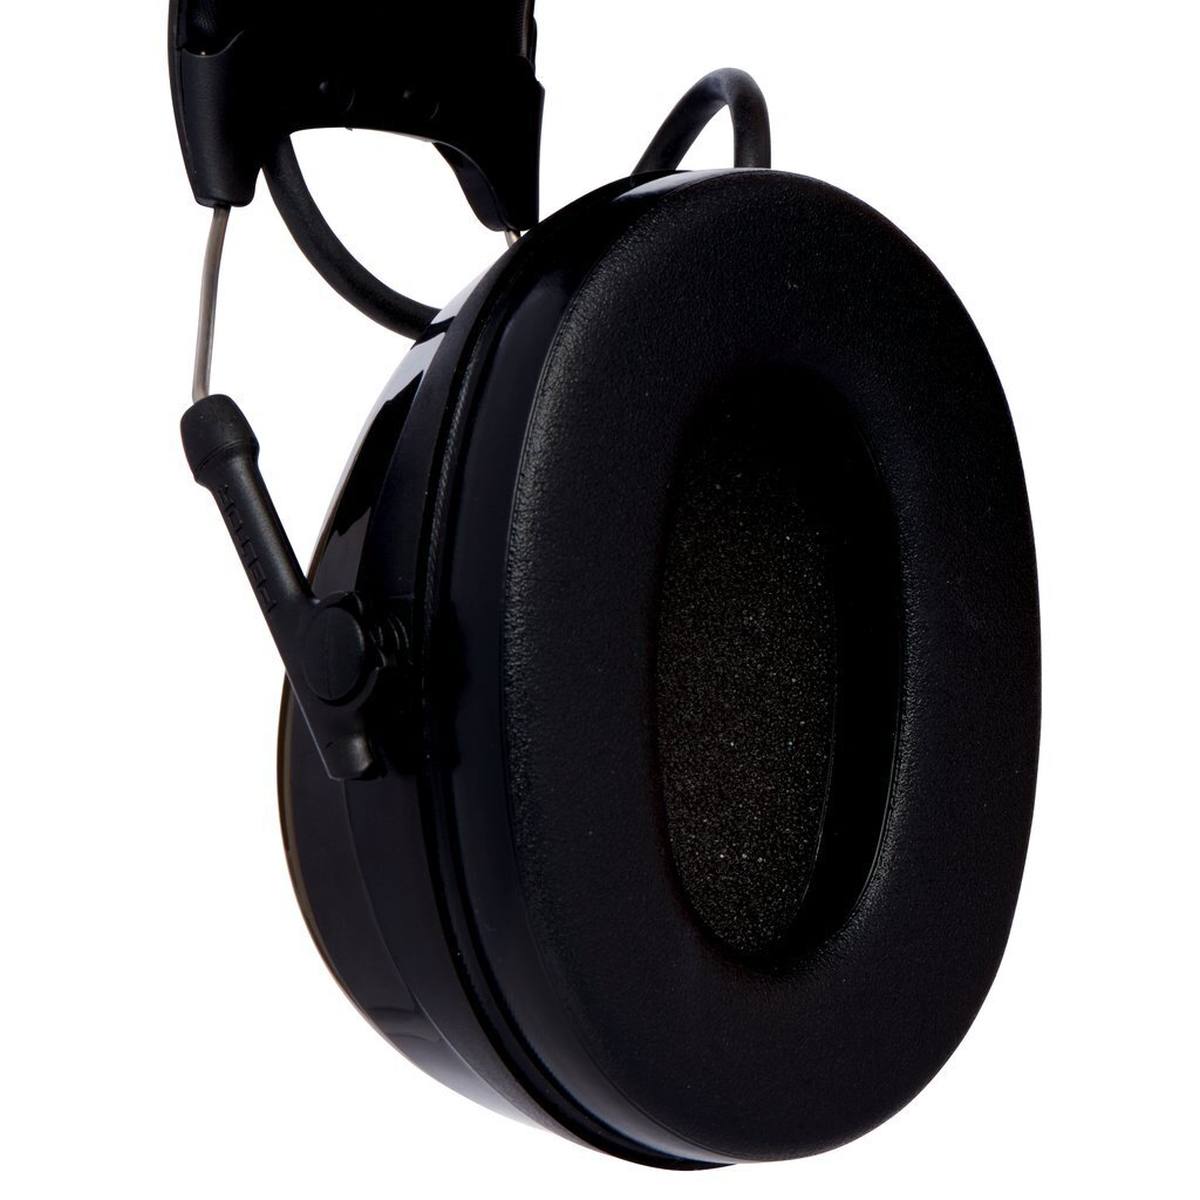 3M Peltor ProTac Hunter -kuulonsuojaimet, vihreä, kuulokepanta, SNR = 26 dB.